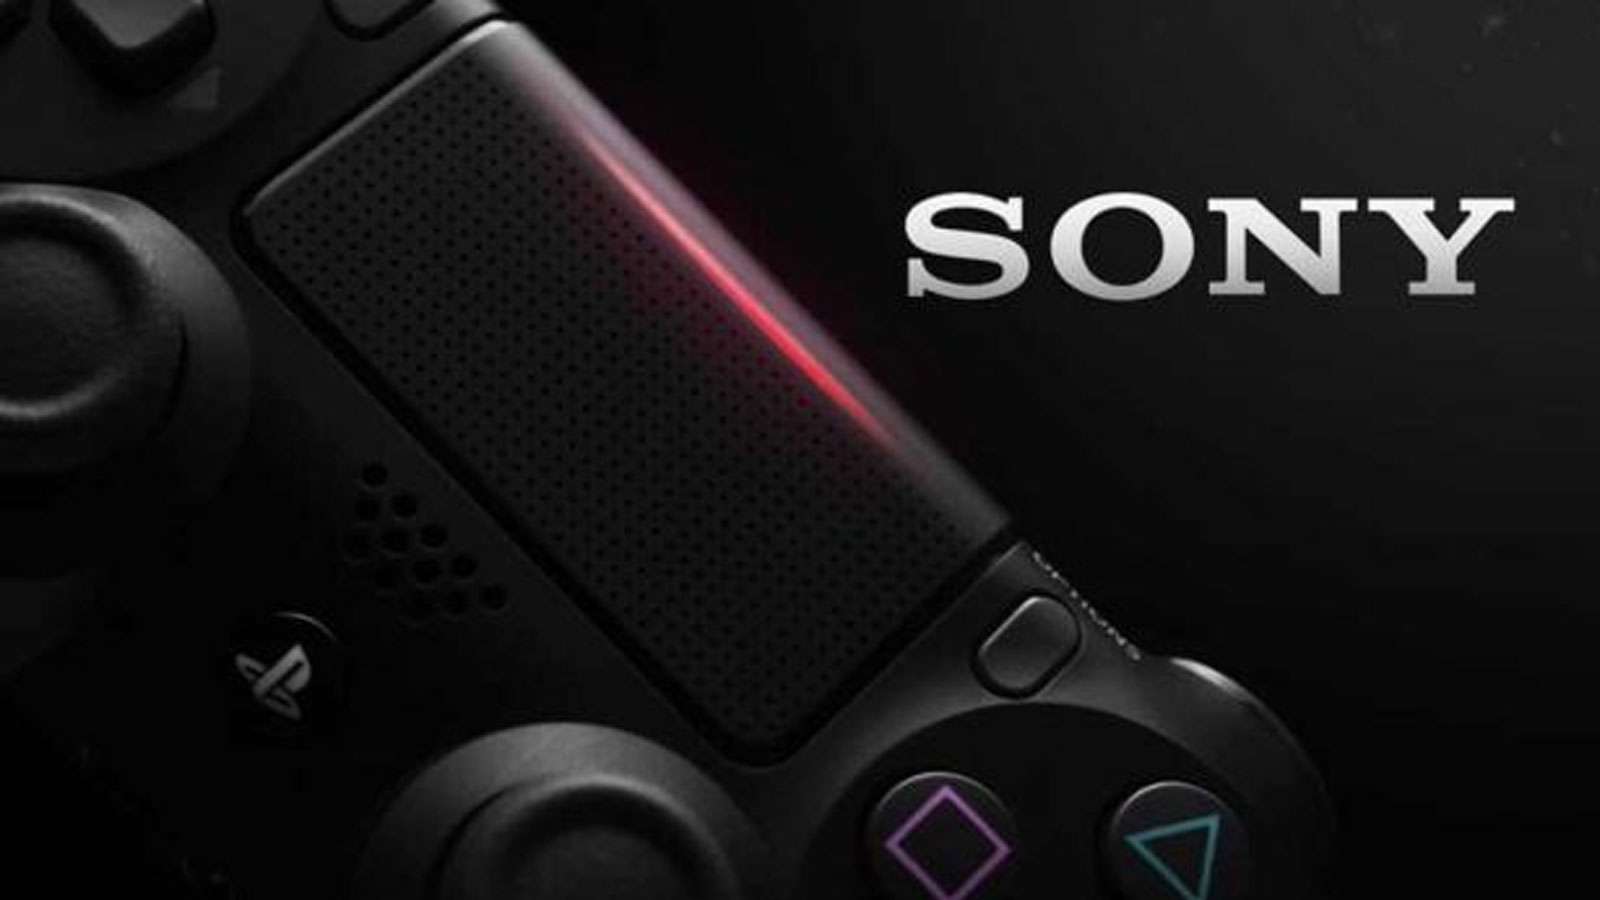 Sony / Playstation